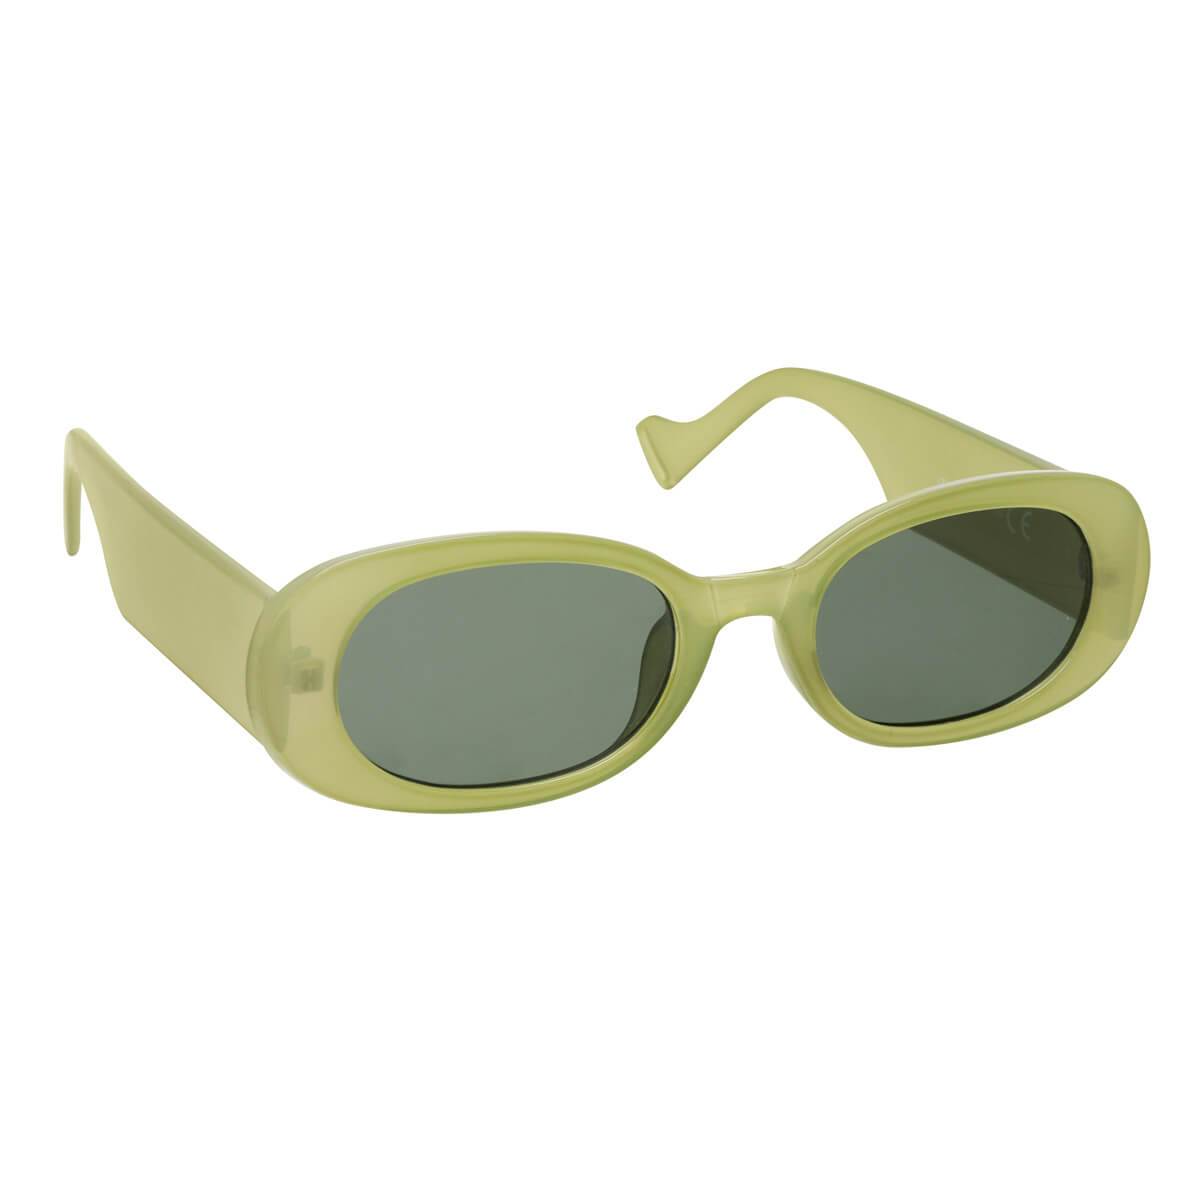 Rounded rectangular sunglasses